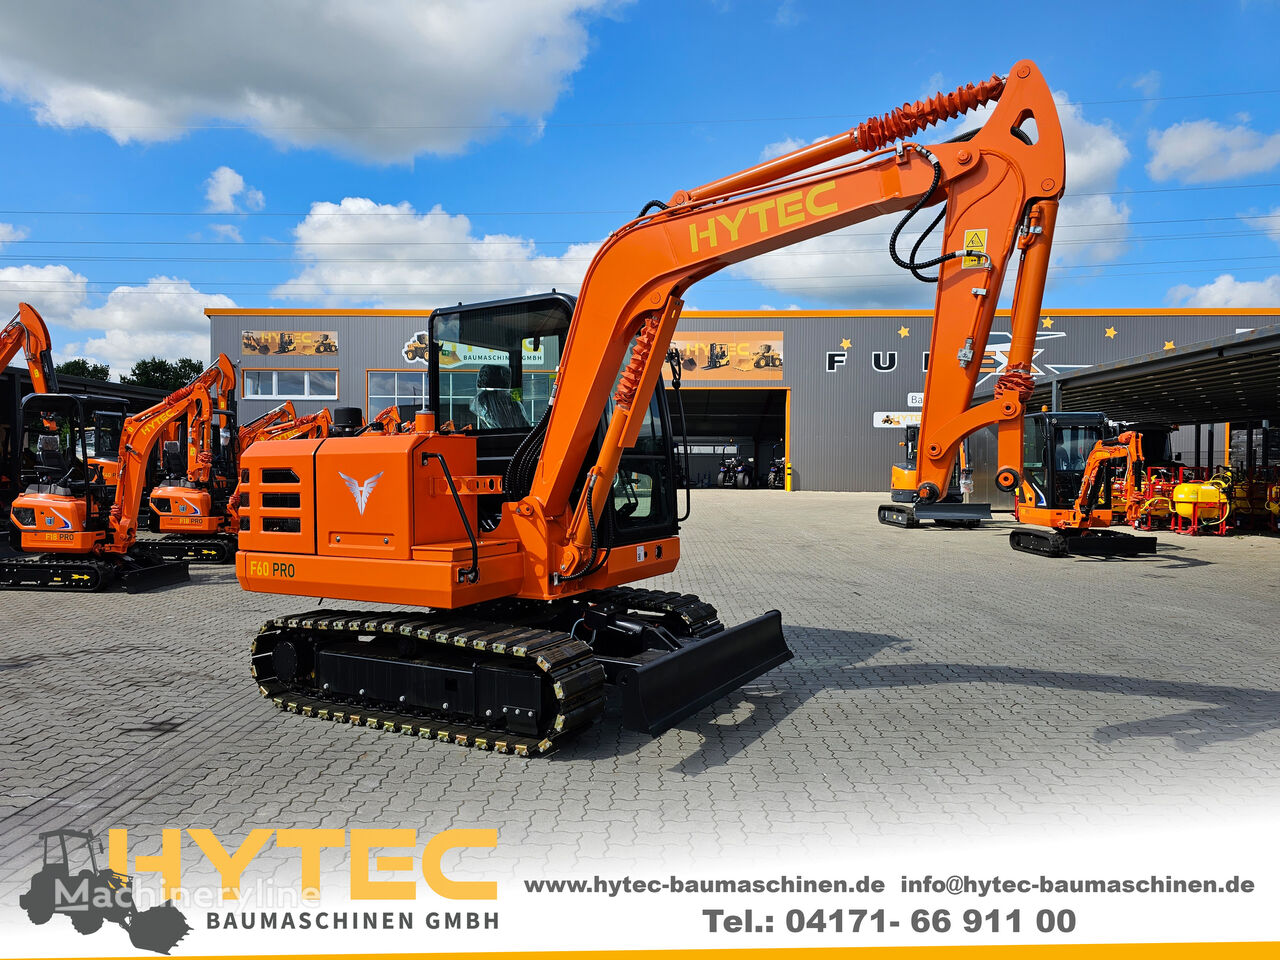 new Hytec F60 Pro tracked excavator